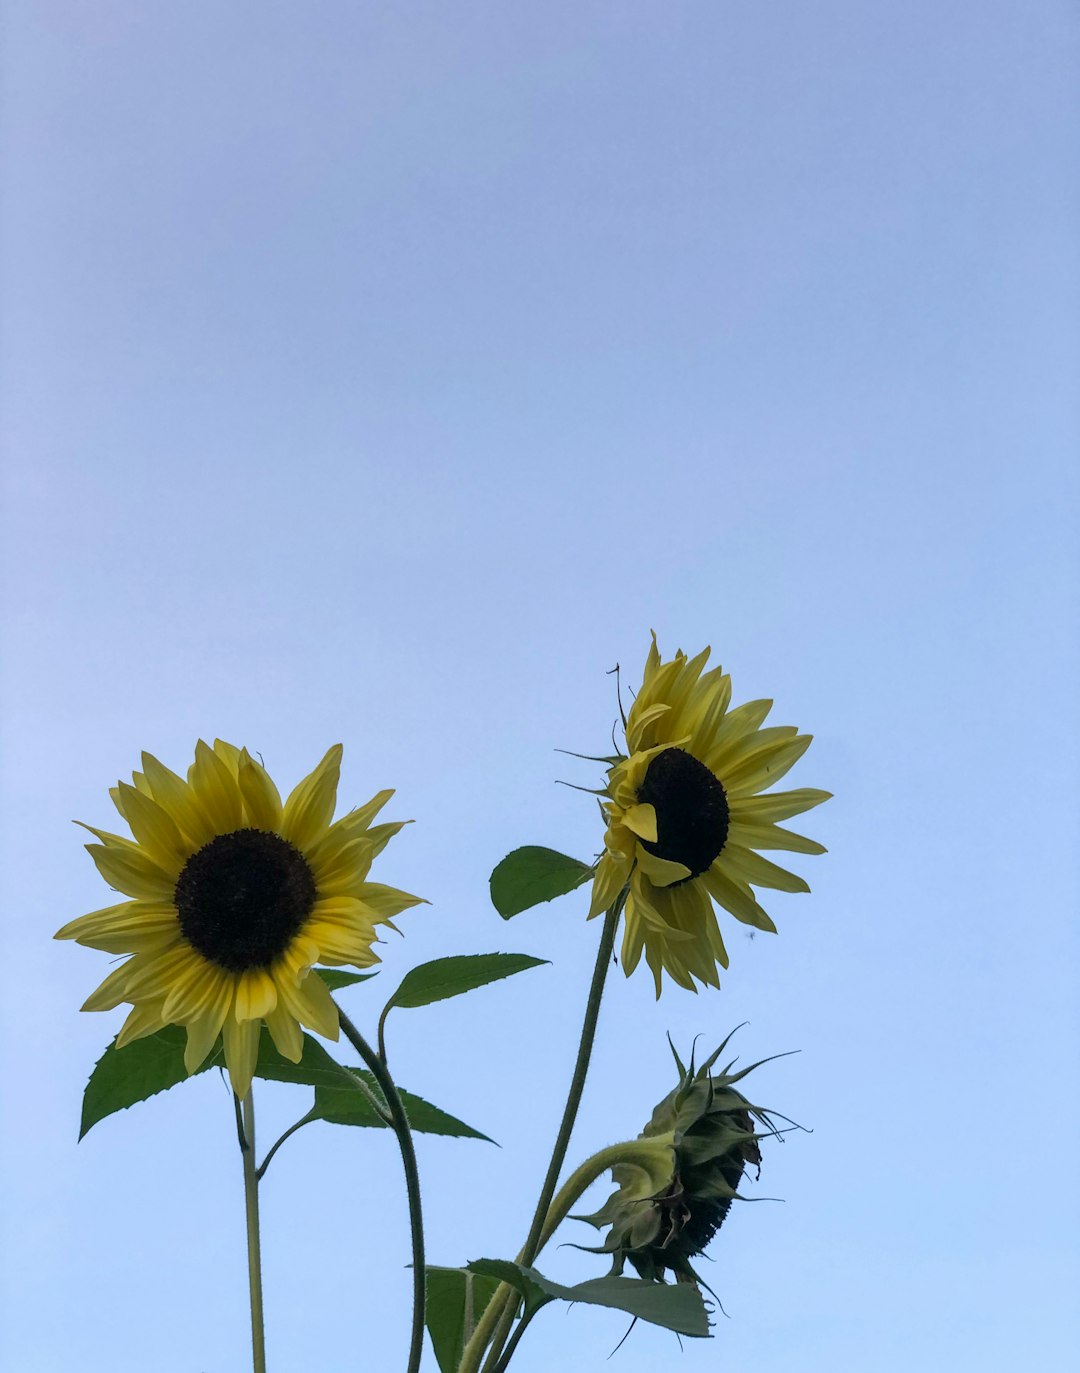 sunflower under white sky during daytime